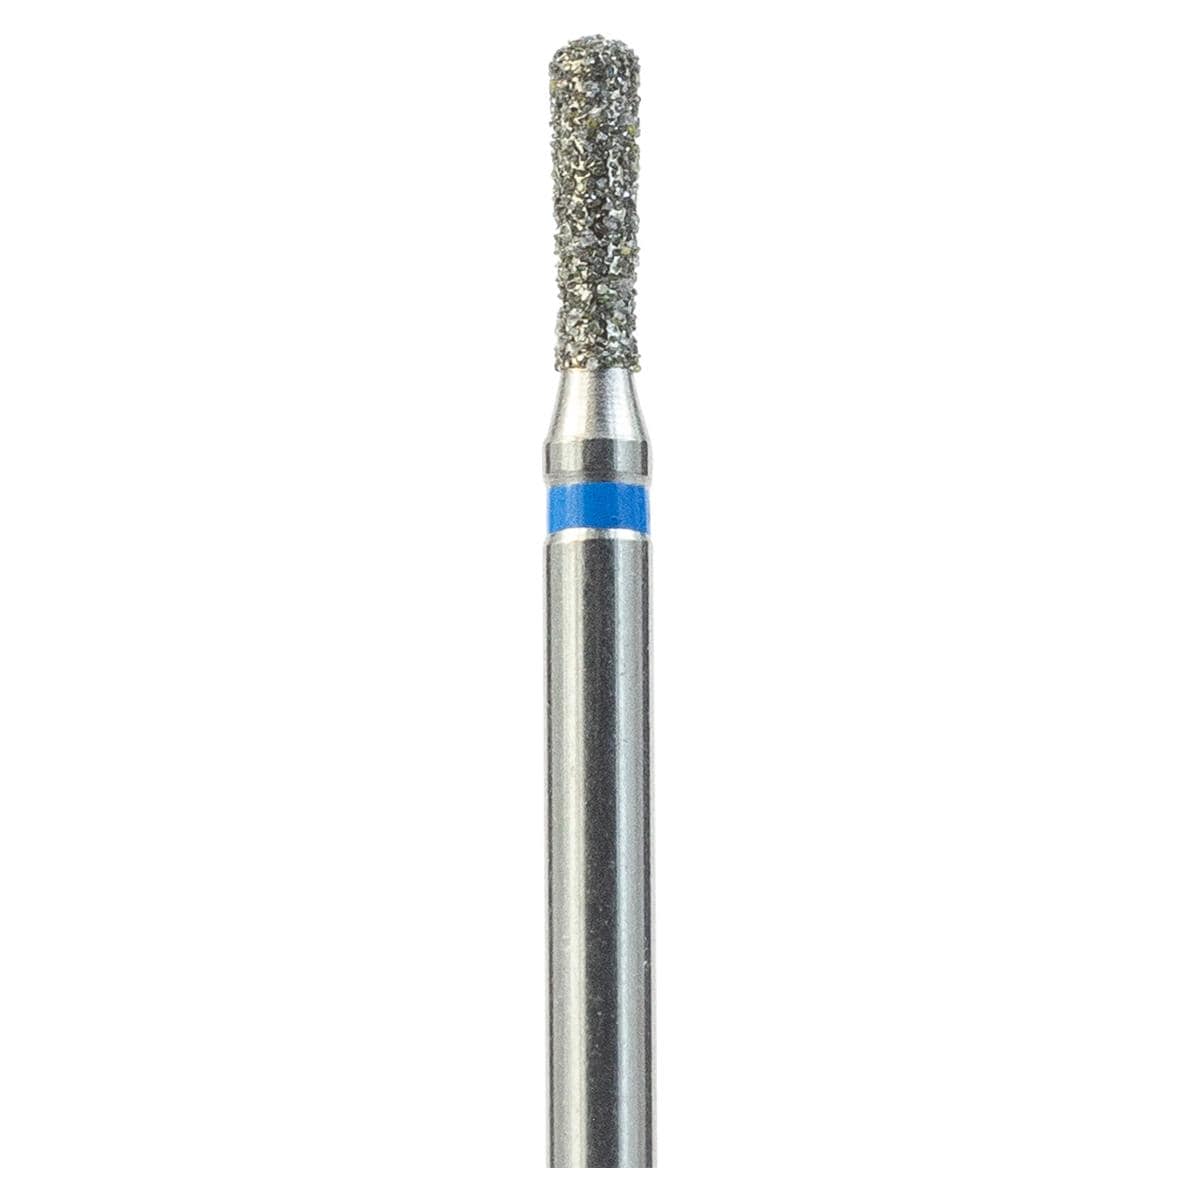 FG-Diamant Ultimate R-D, Birne, Form 830L - ISO 014, mittel (blau), Kopflänge 4 mm, Packung 5 Stück